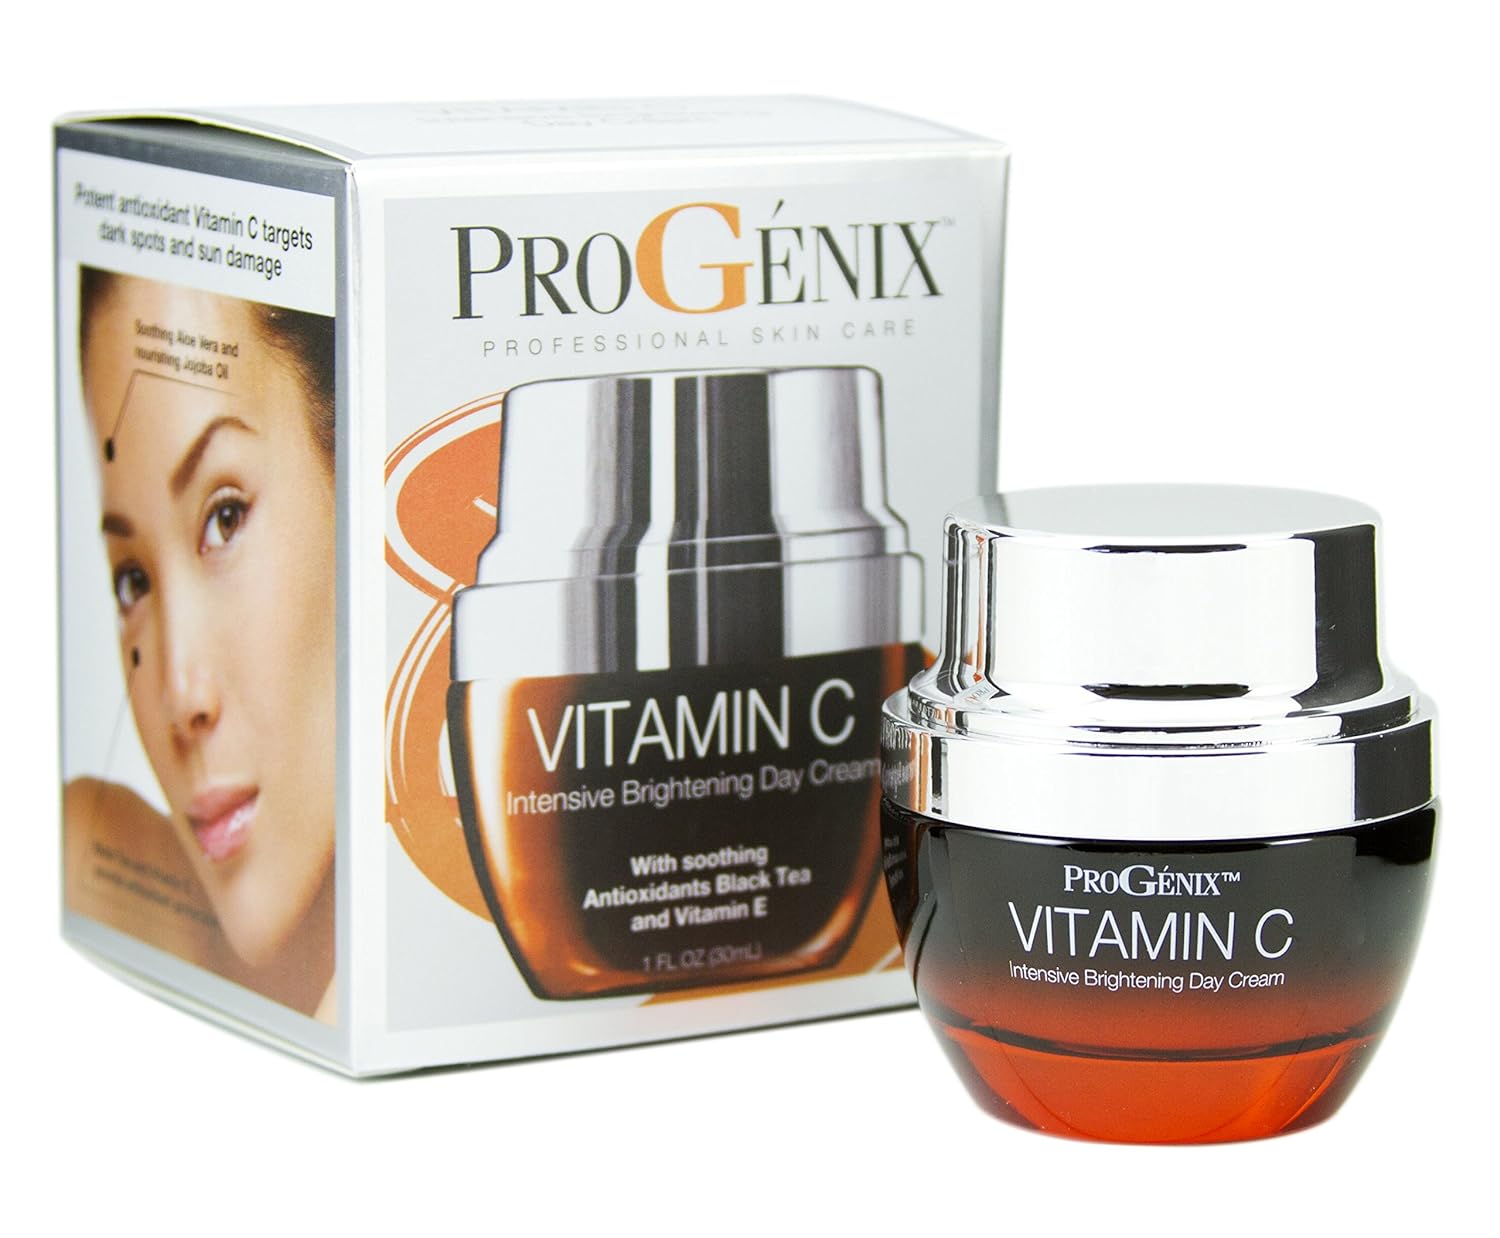 Progenix Vitamin C Intensive Brightening Day Cream with Hyal